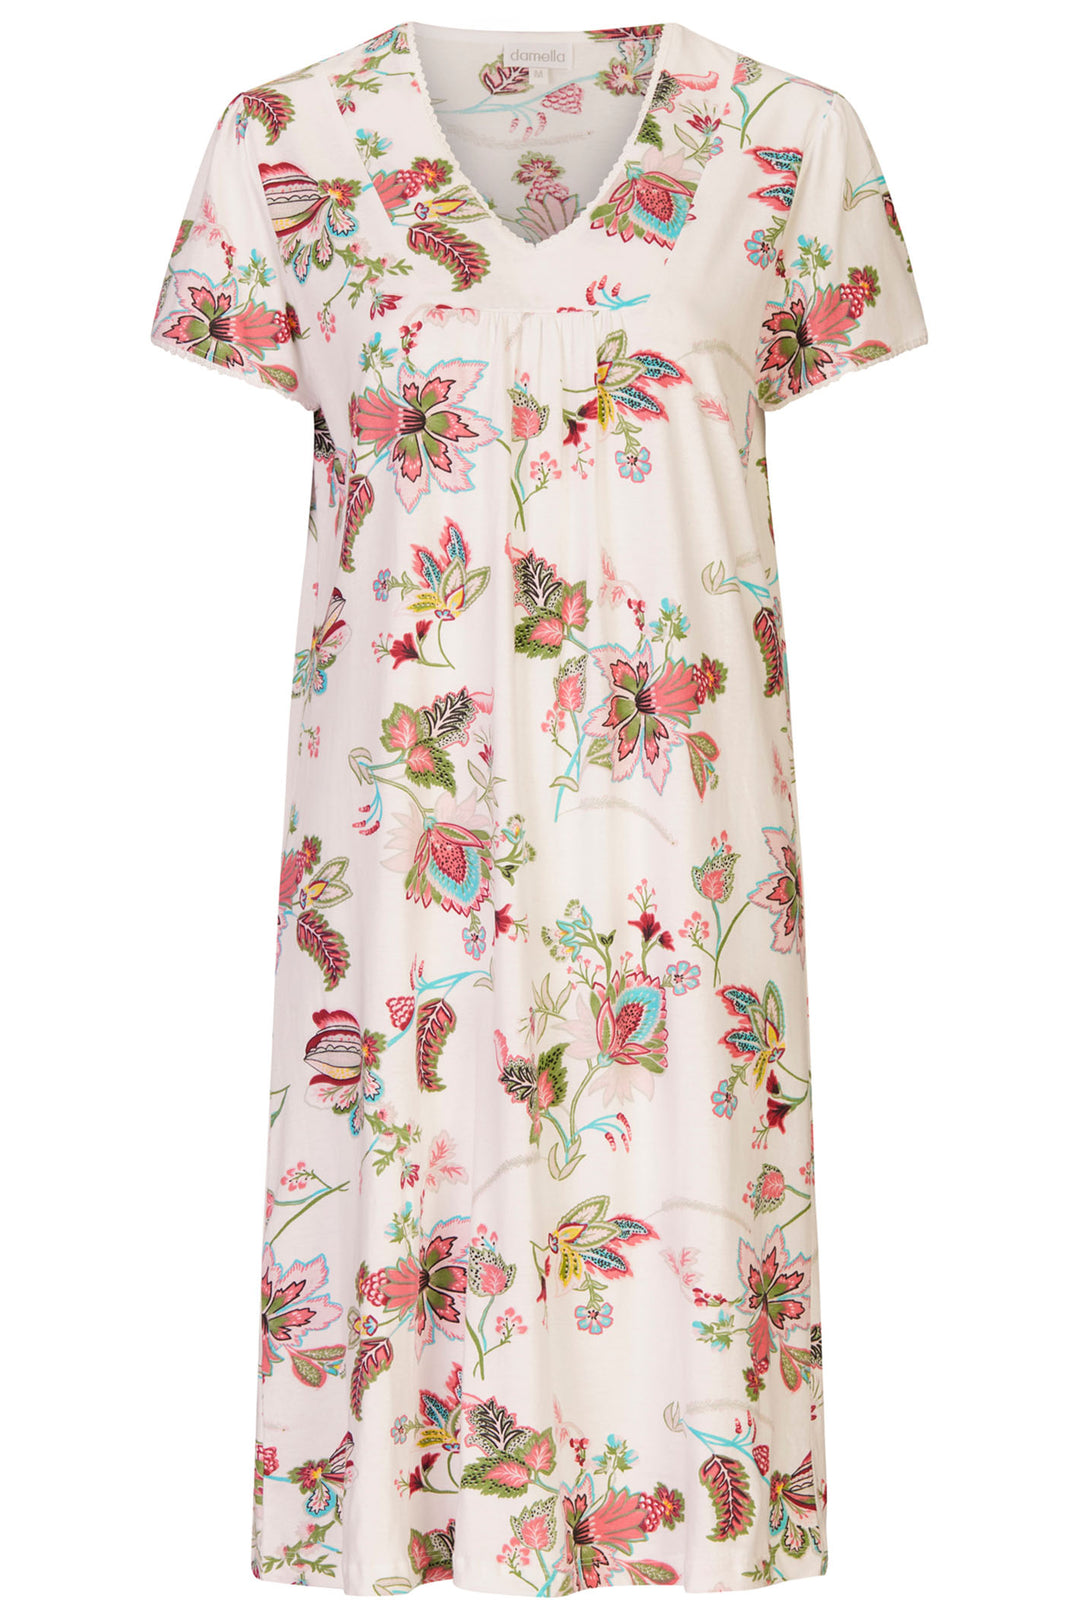 Damella 60006 001 White Floral Print V-Neck Nightdress - Shirley Allum Boutique